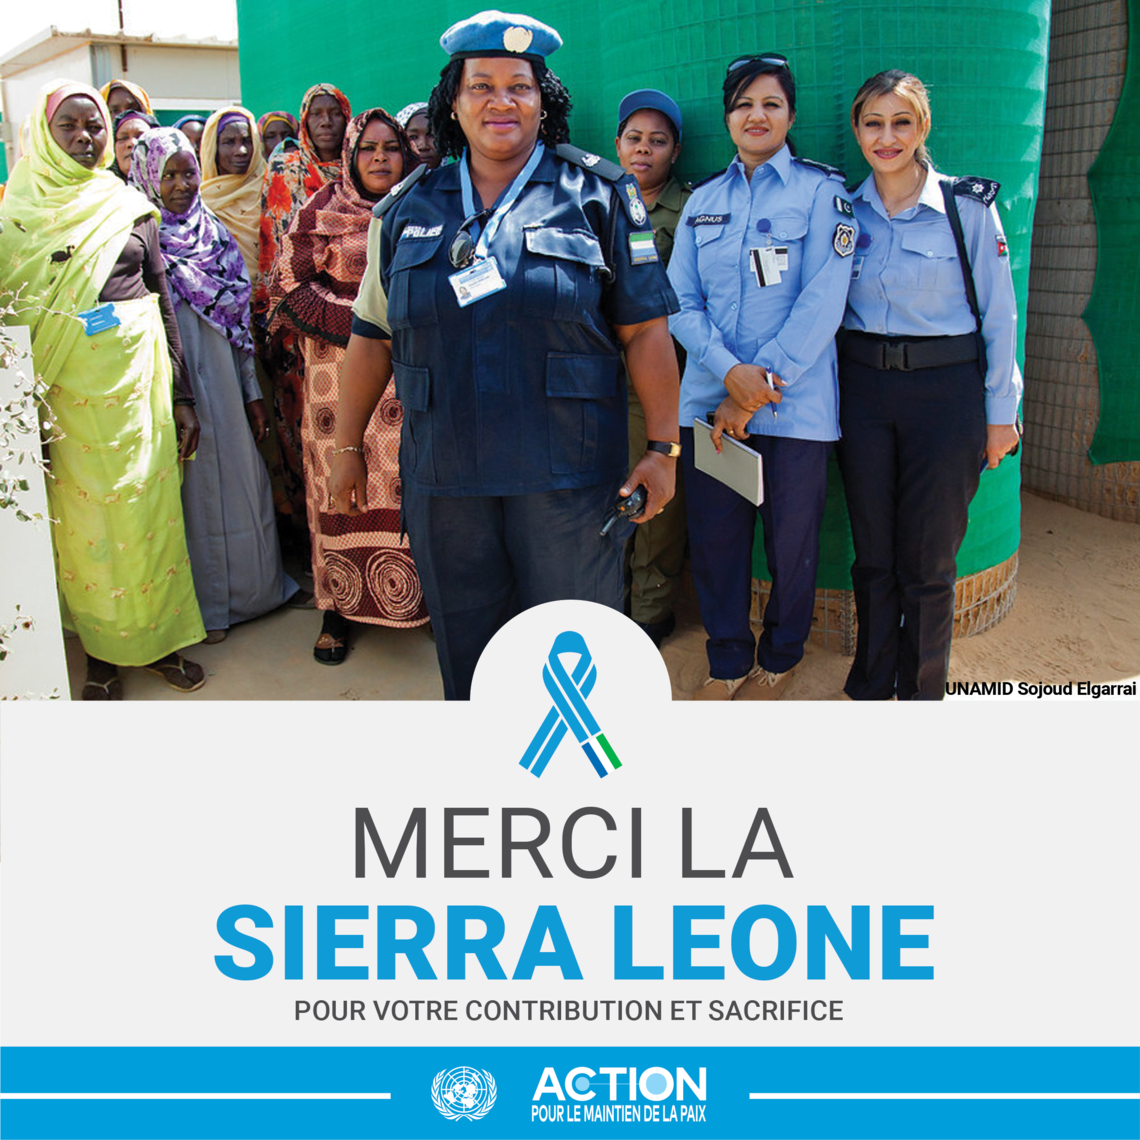 Merci la Sierra Leone